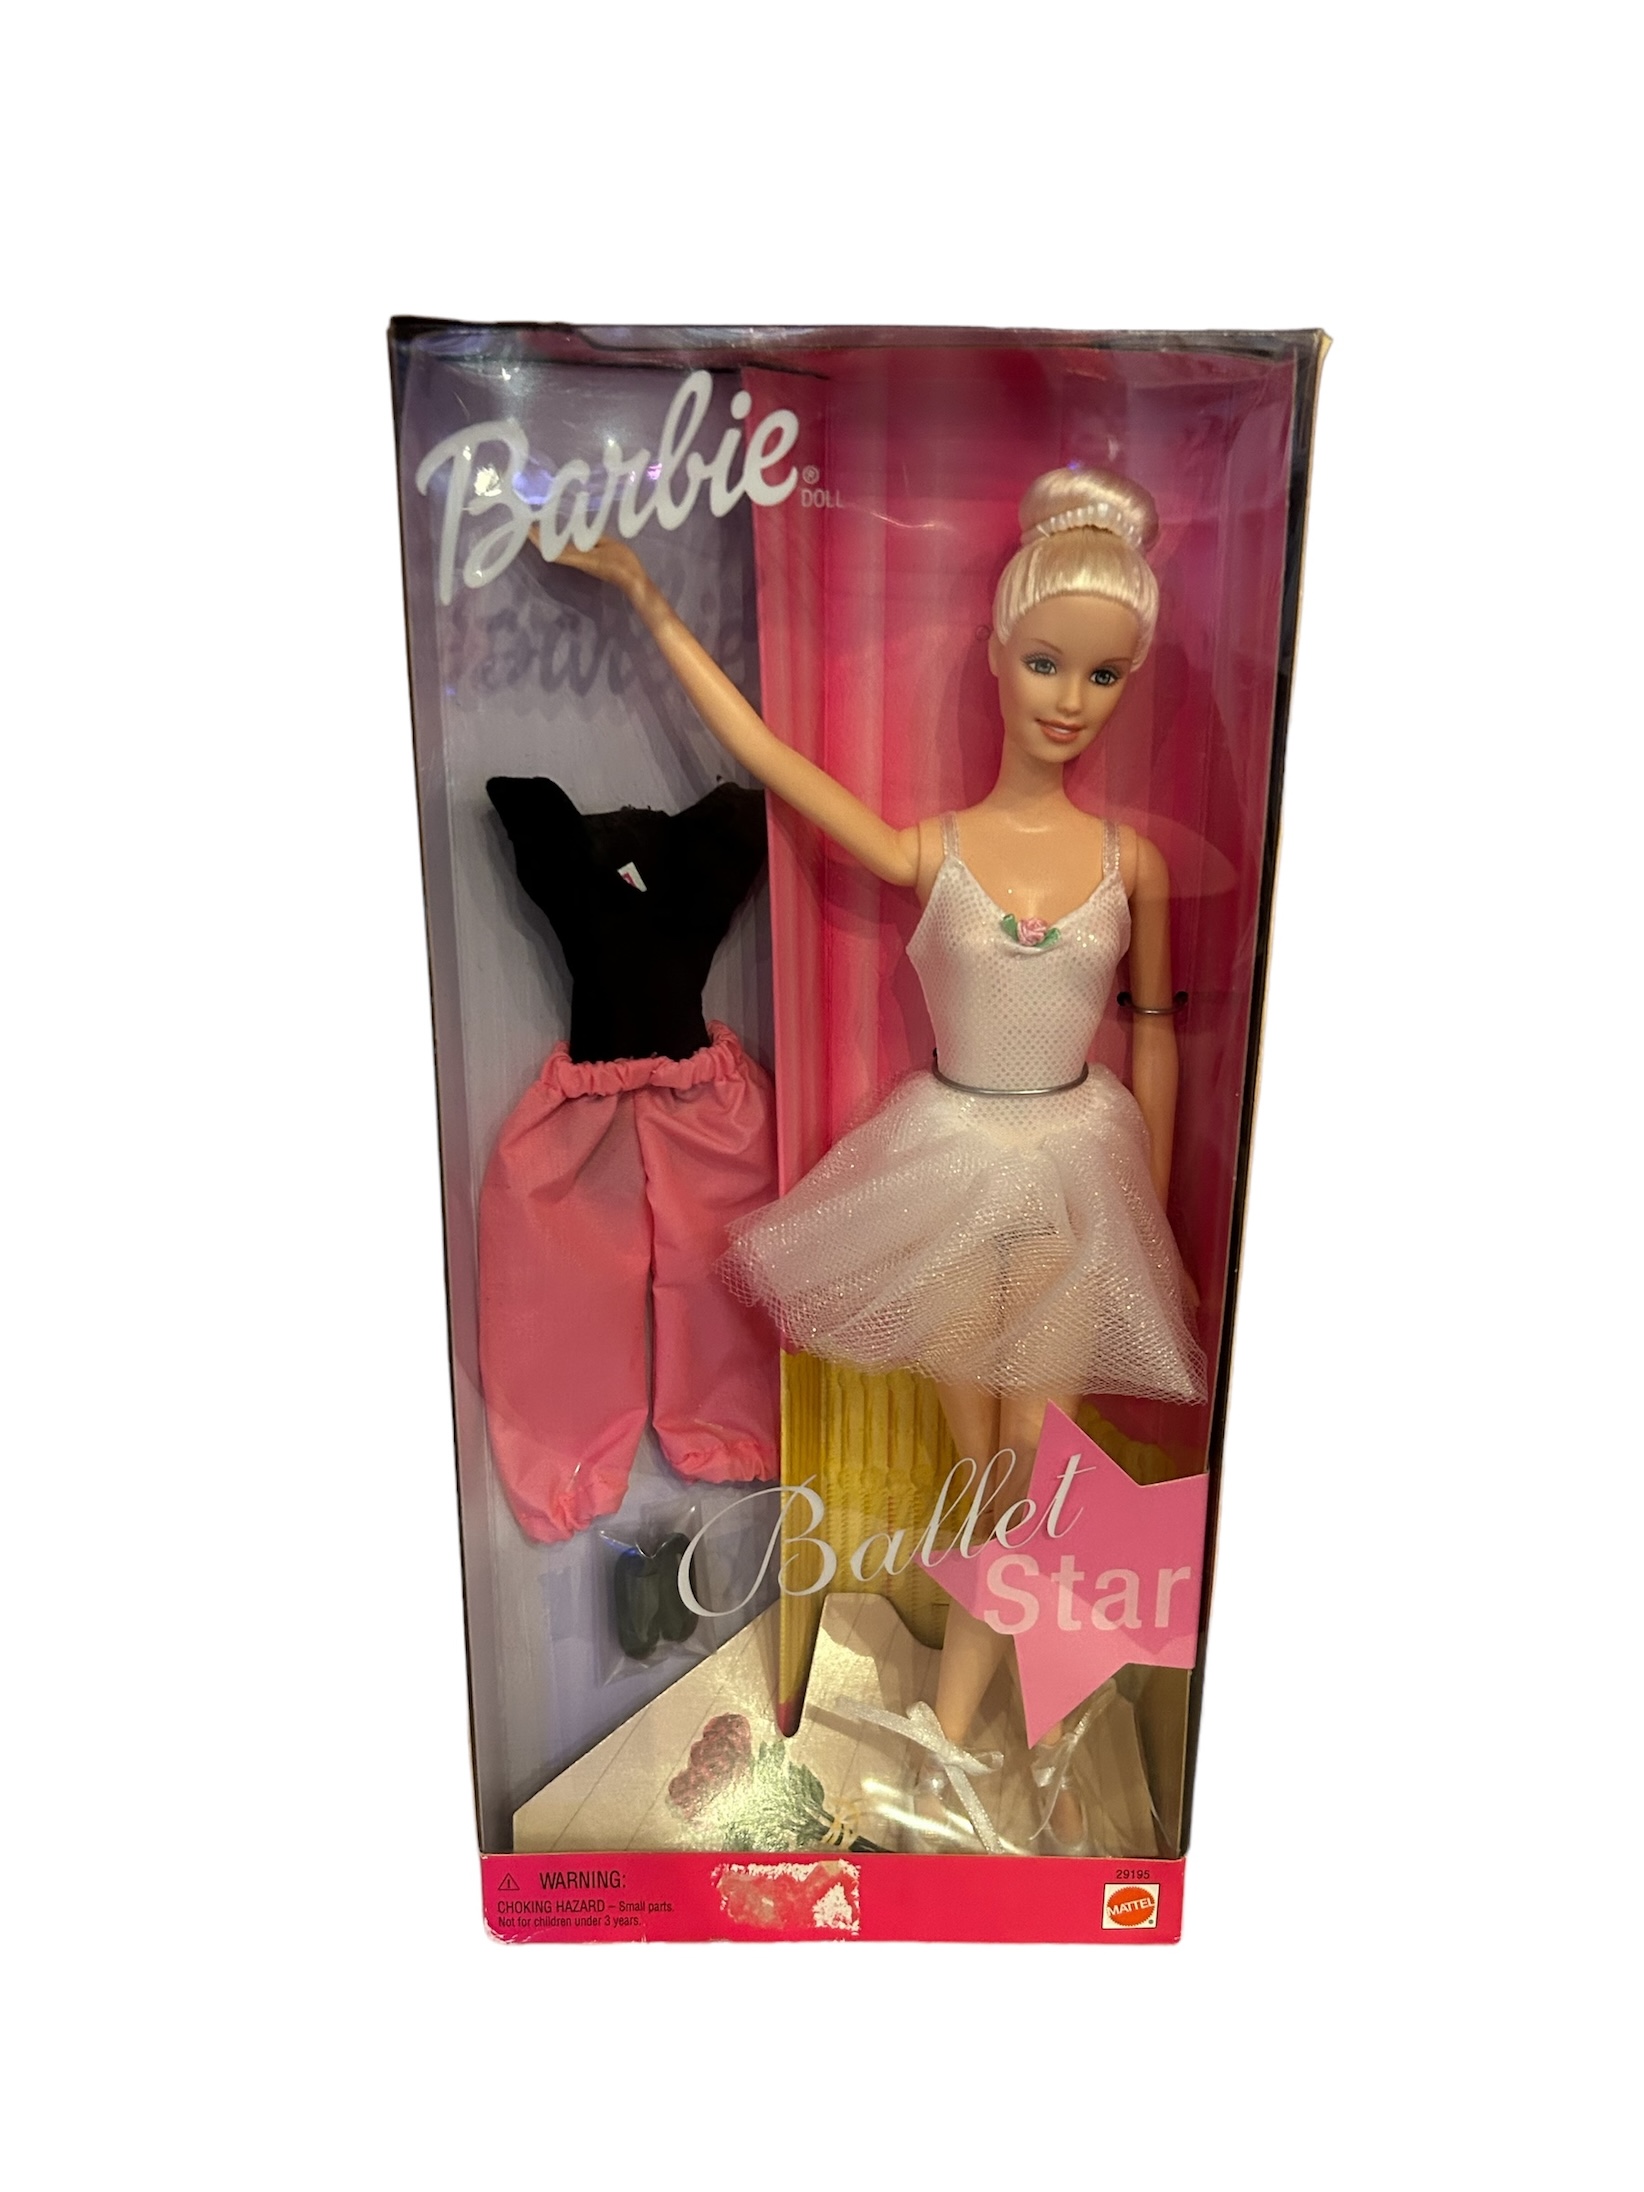 Ballet star barbie